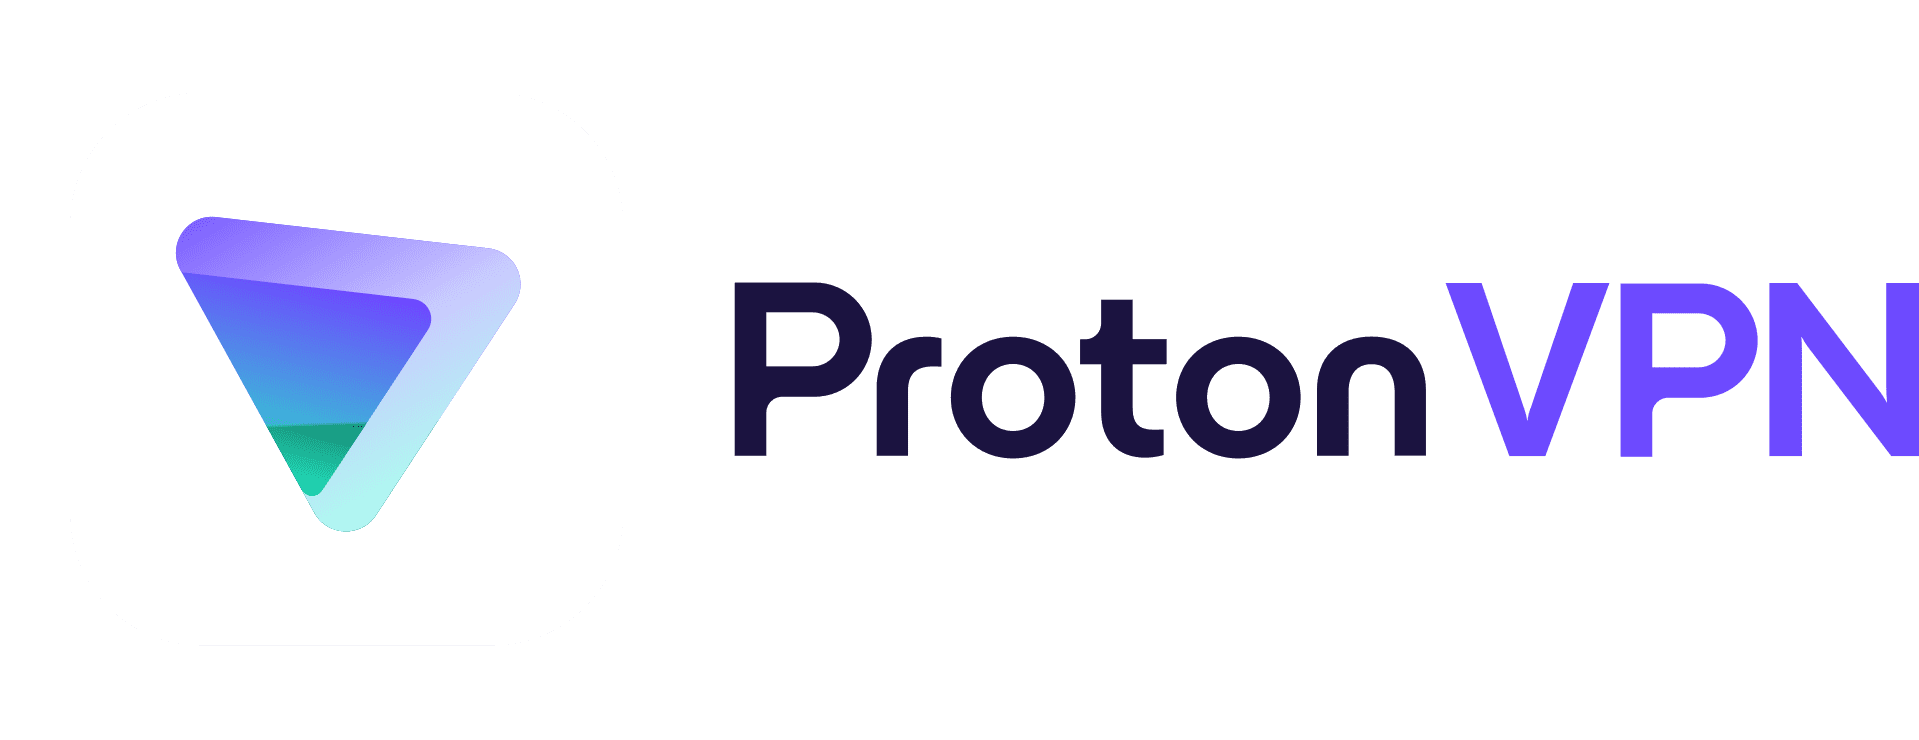 ProtonVPN: Is It Safe? - Product Logo